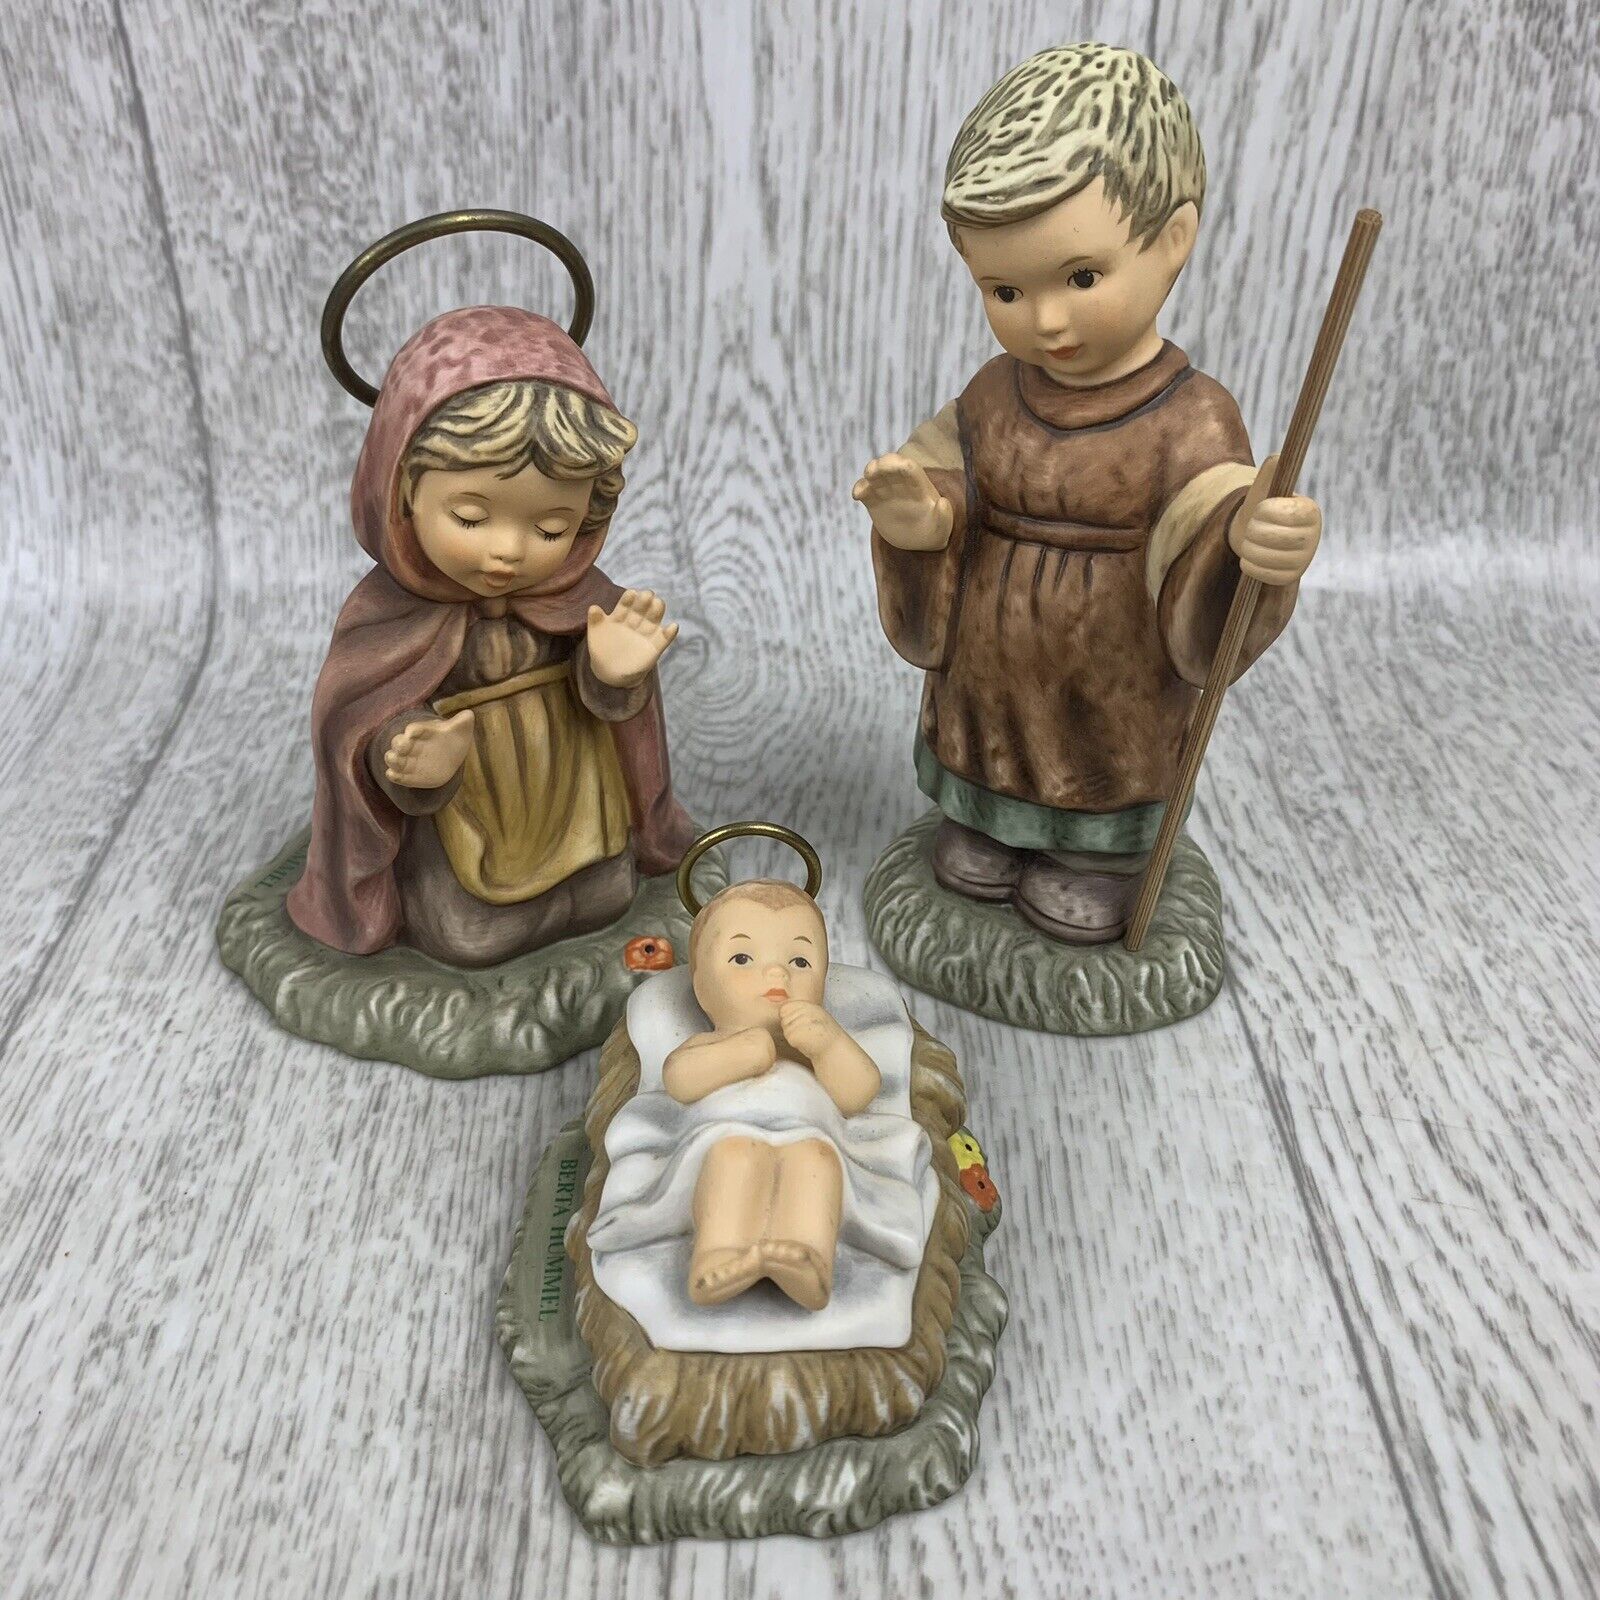 The Berta Hummel Studio Goebel 1996 Joseph Mary Baby Jesus Nativity Figurines